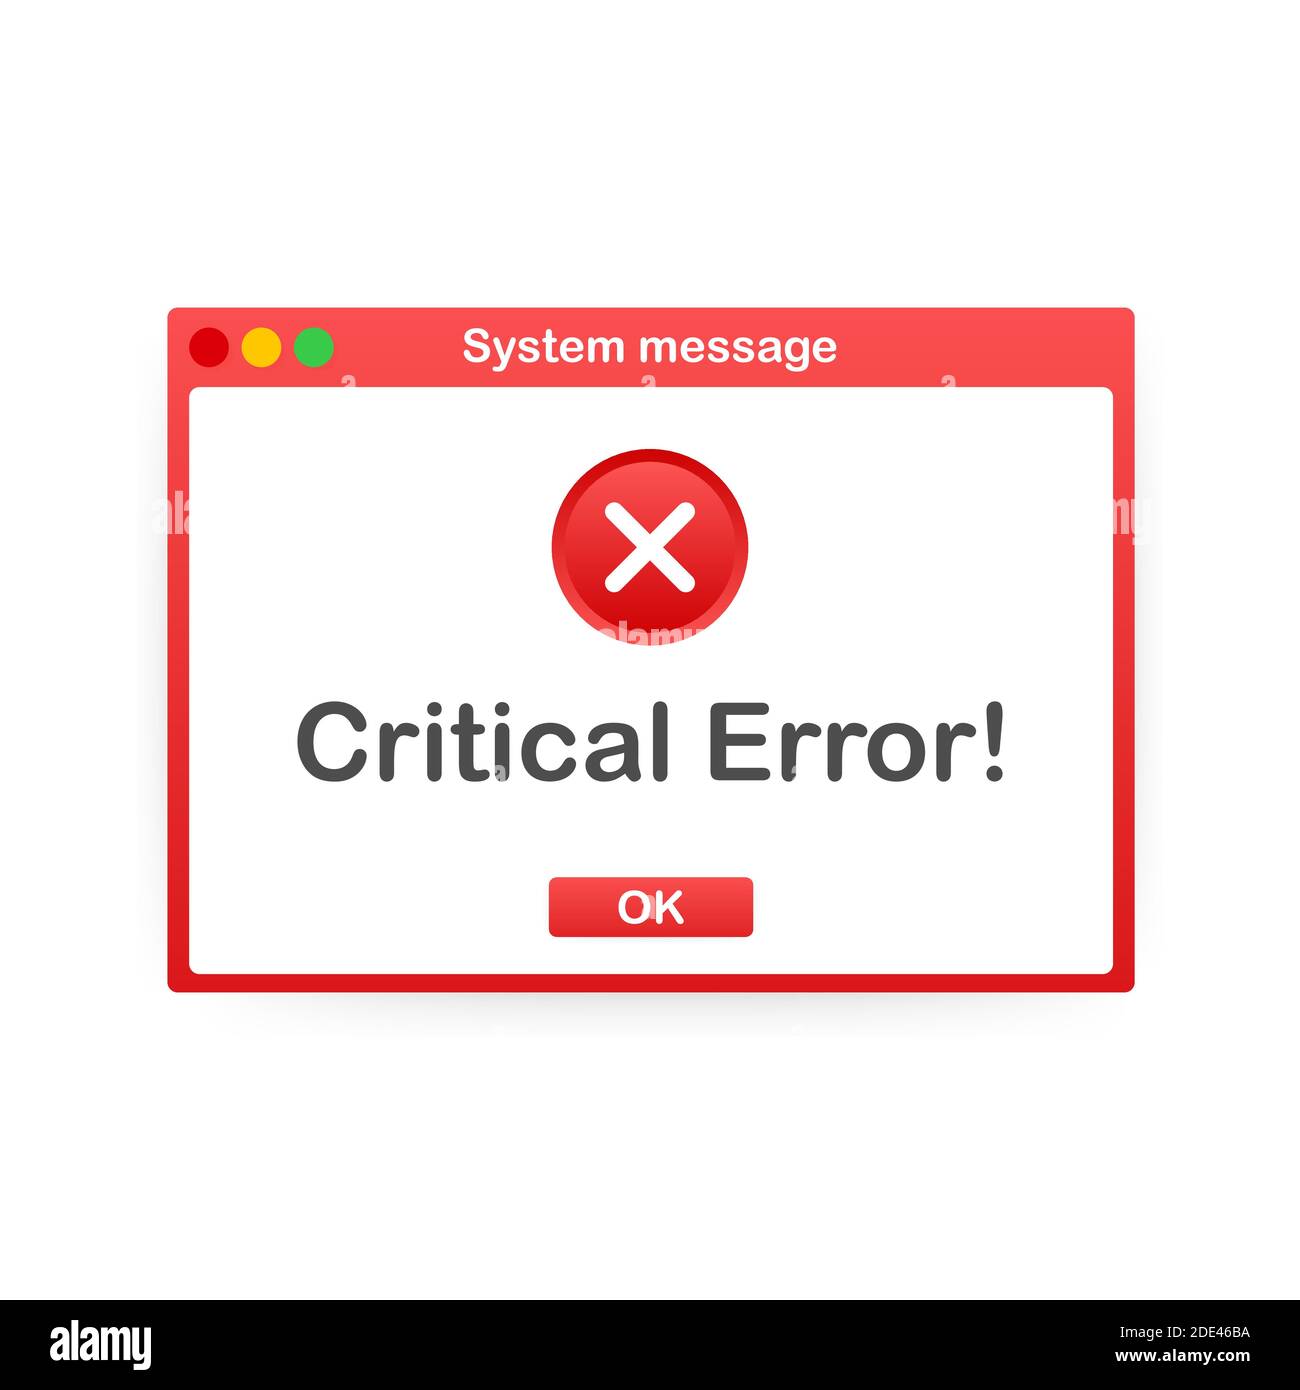 Vintage User Interface. Critical Error Warning Message. Vector stock illustration. Stock Vector